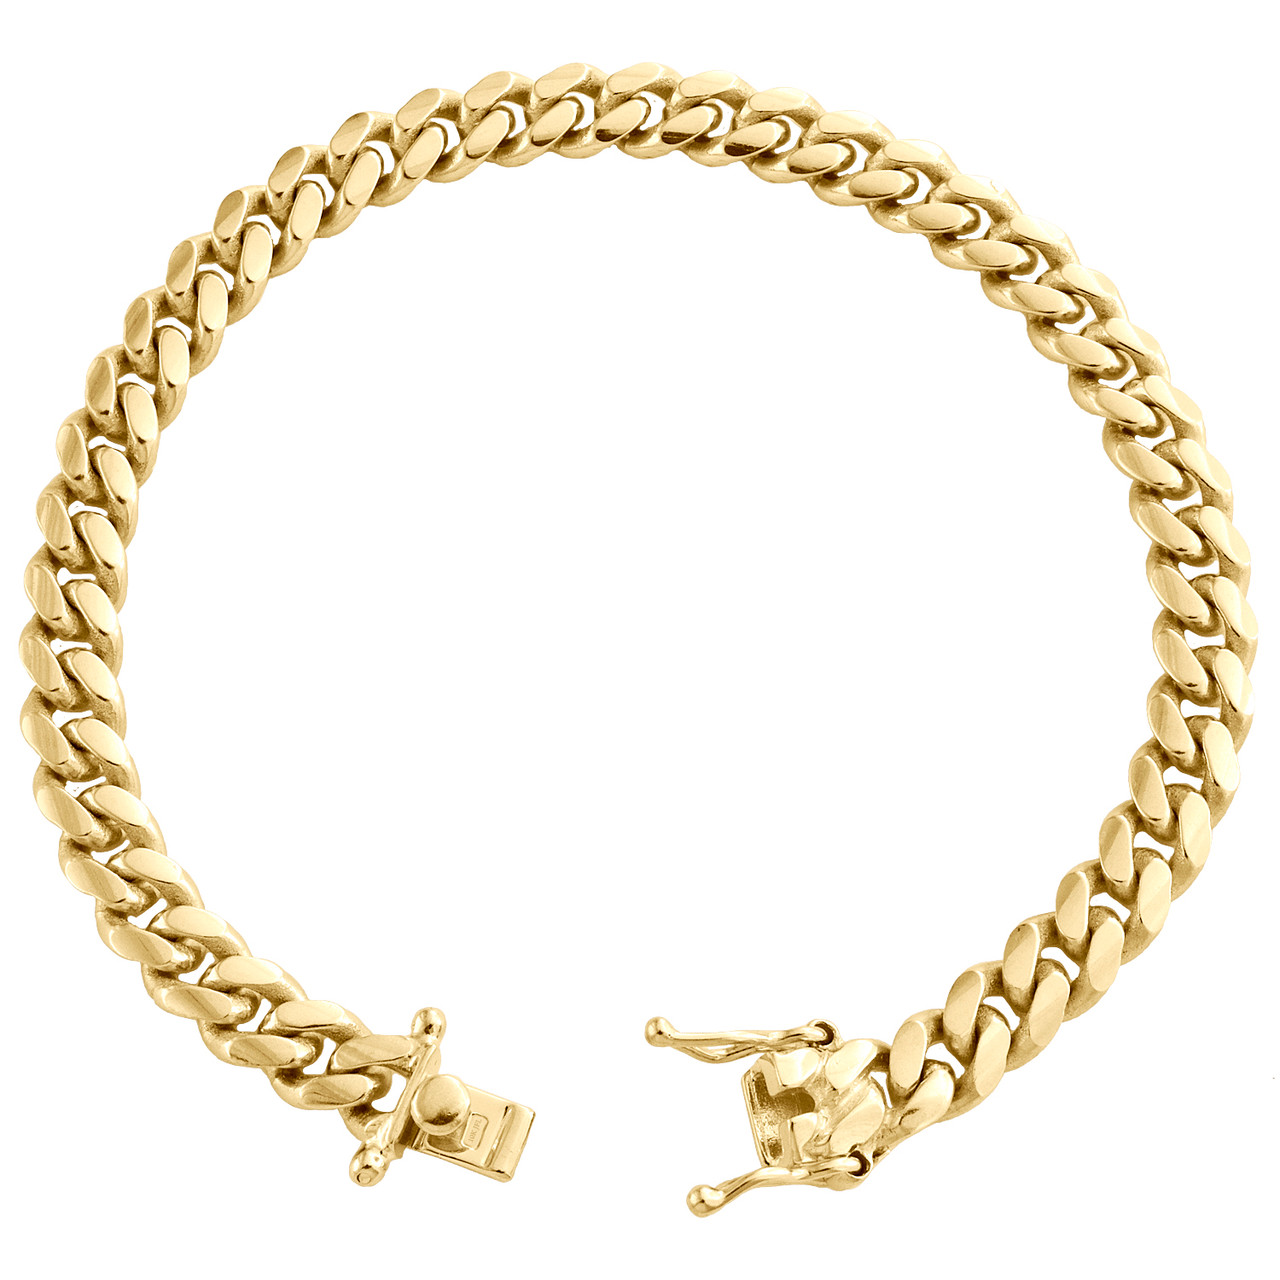 Amazon.com: Nuragold 10k Yellow Gold 9mm Solid Miami Cuban Link Chain  Bracelet, Mens Jewelry Box Clasp 7